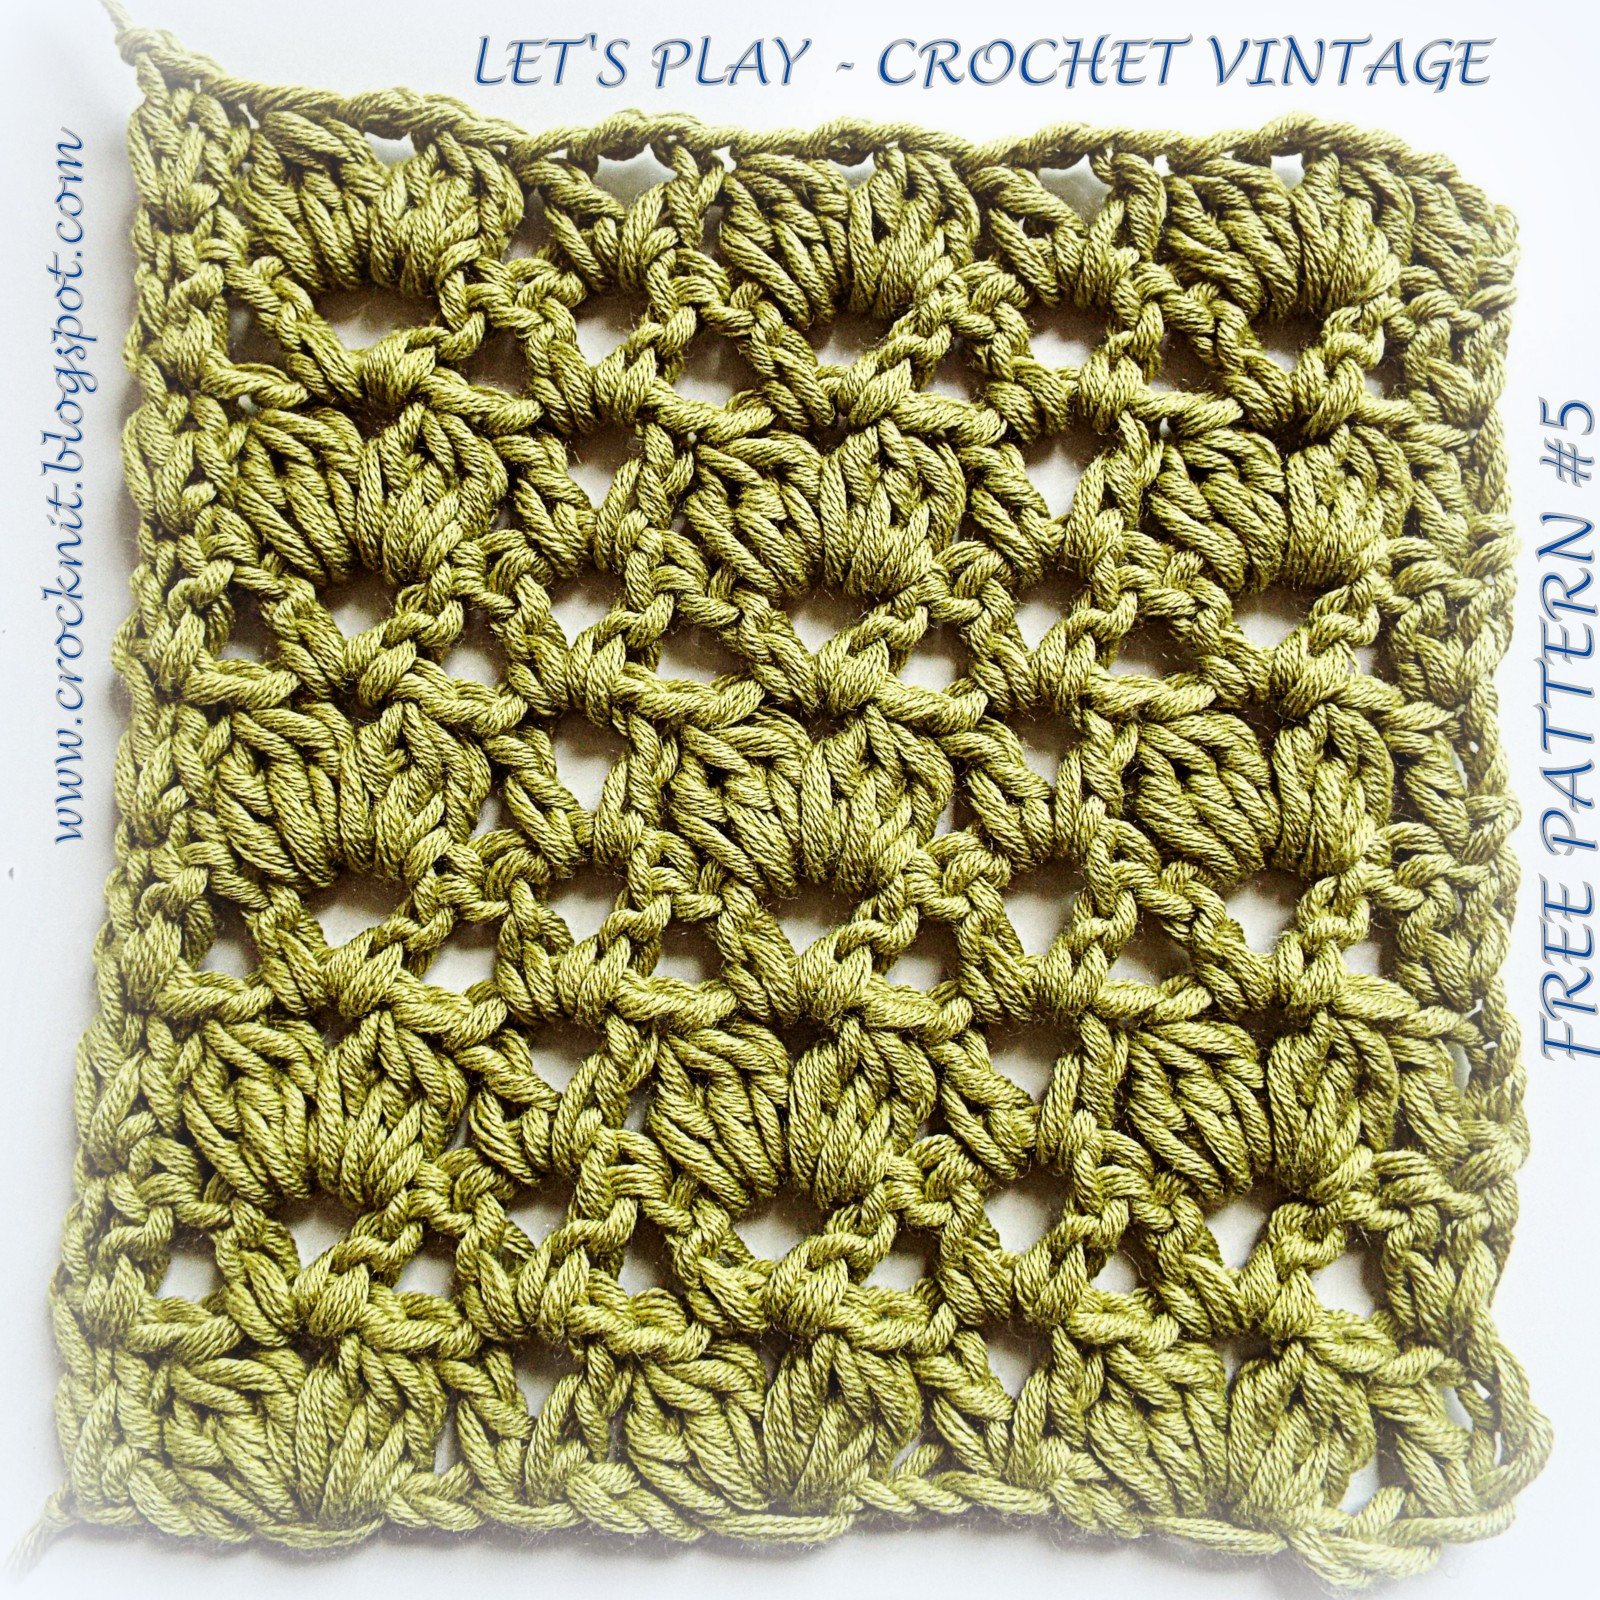 4Mm Crochet Hook Patterns Microcknit Creations Lets Play Crochet Vintage Free Pattern 5